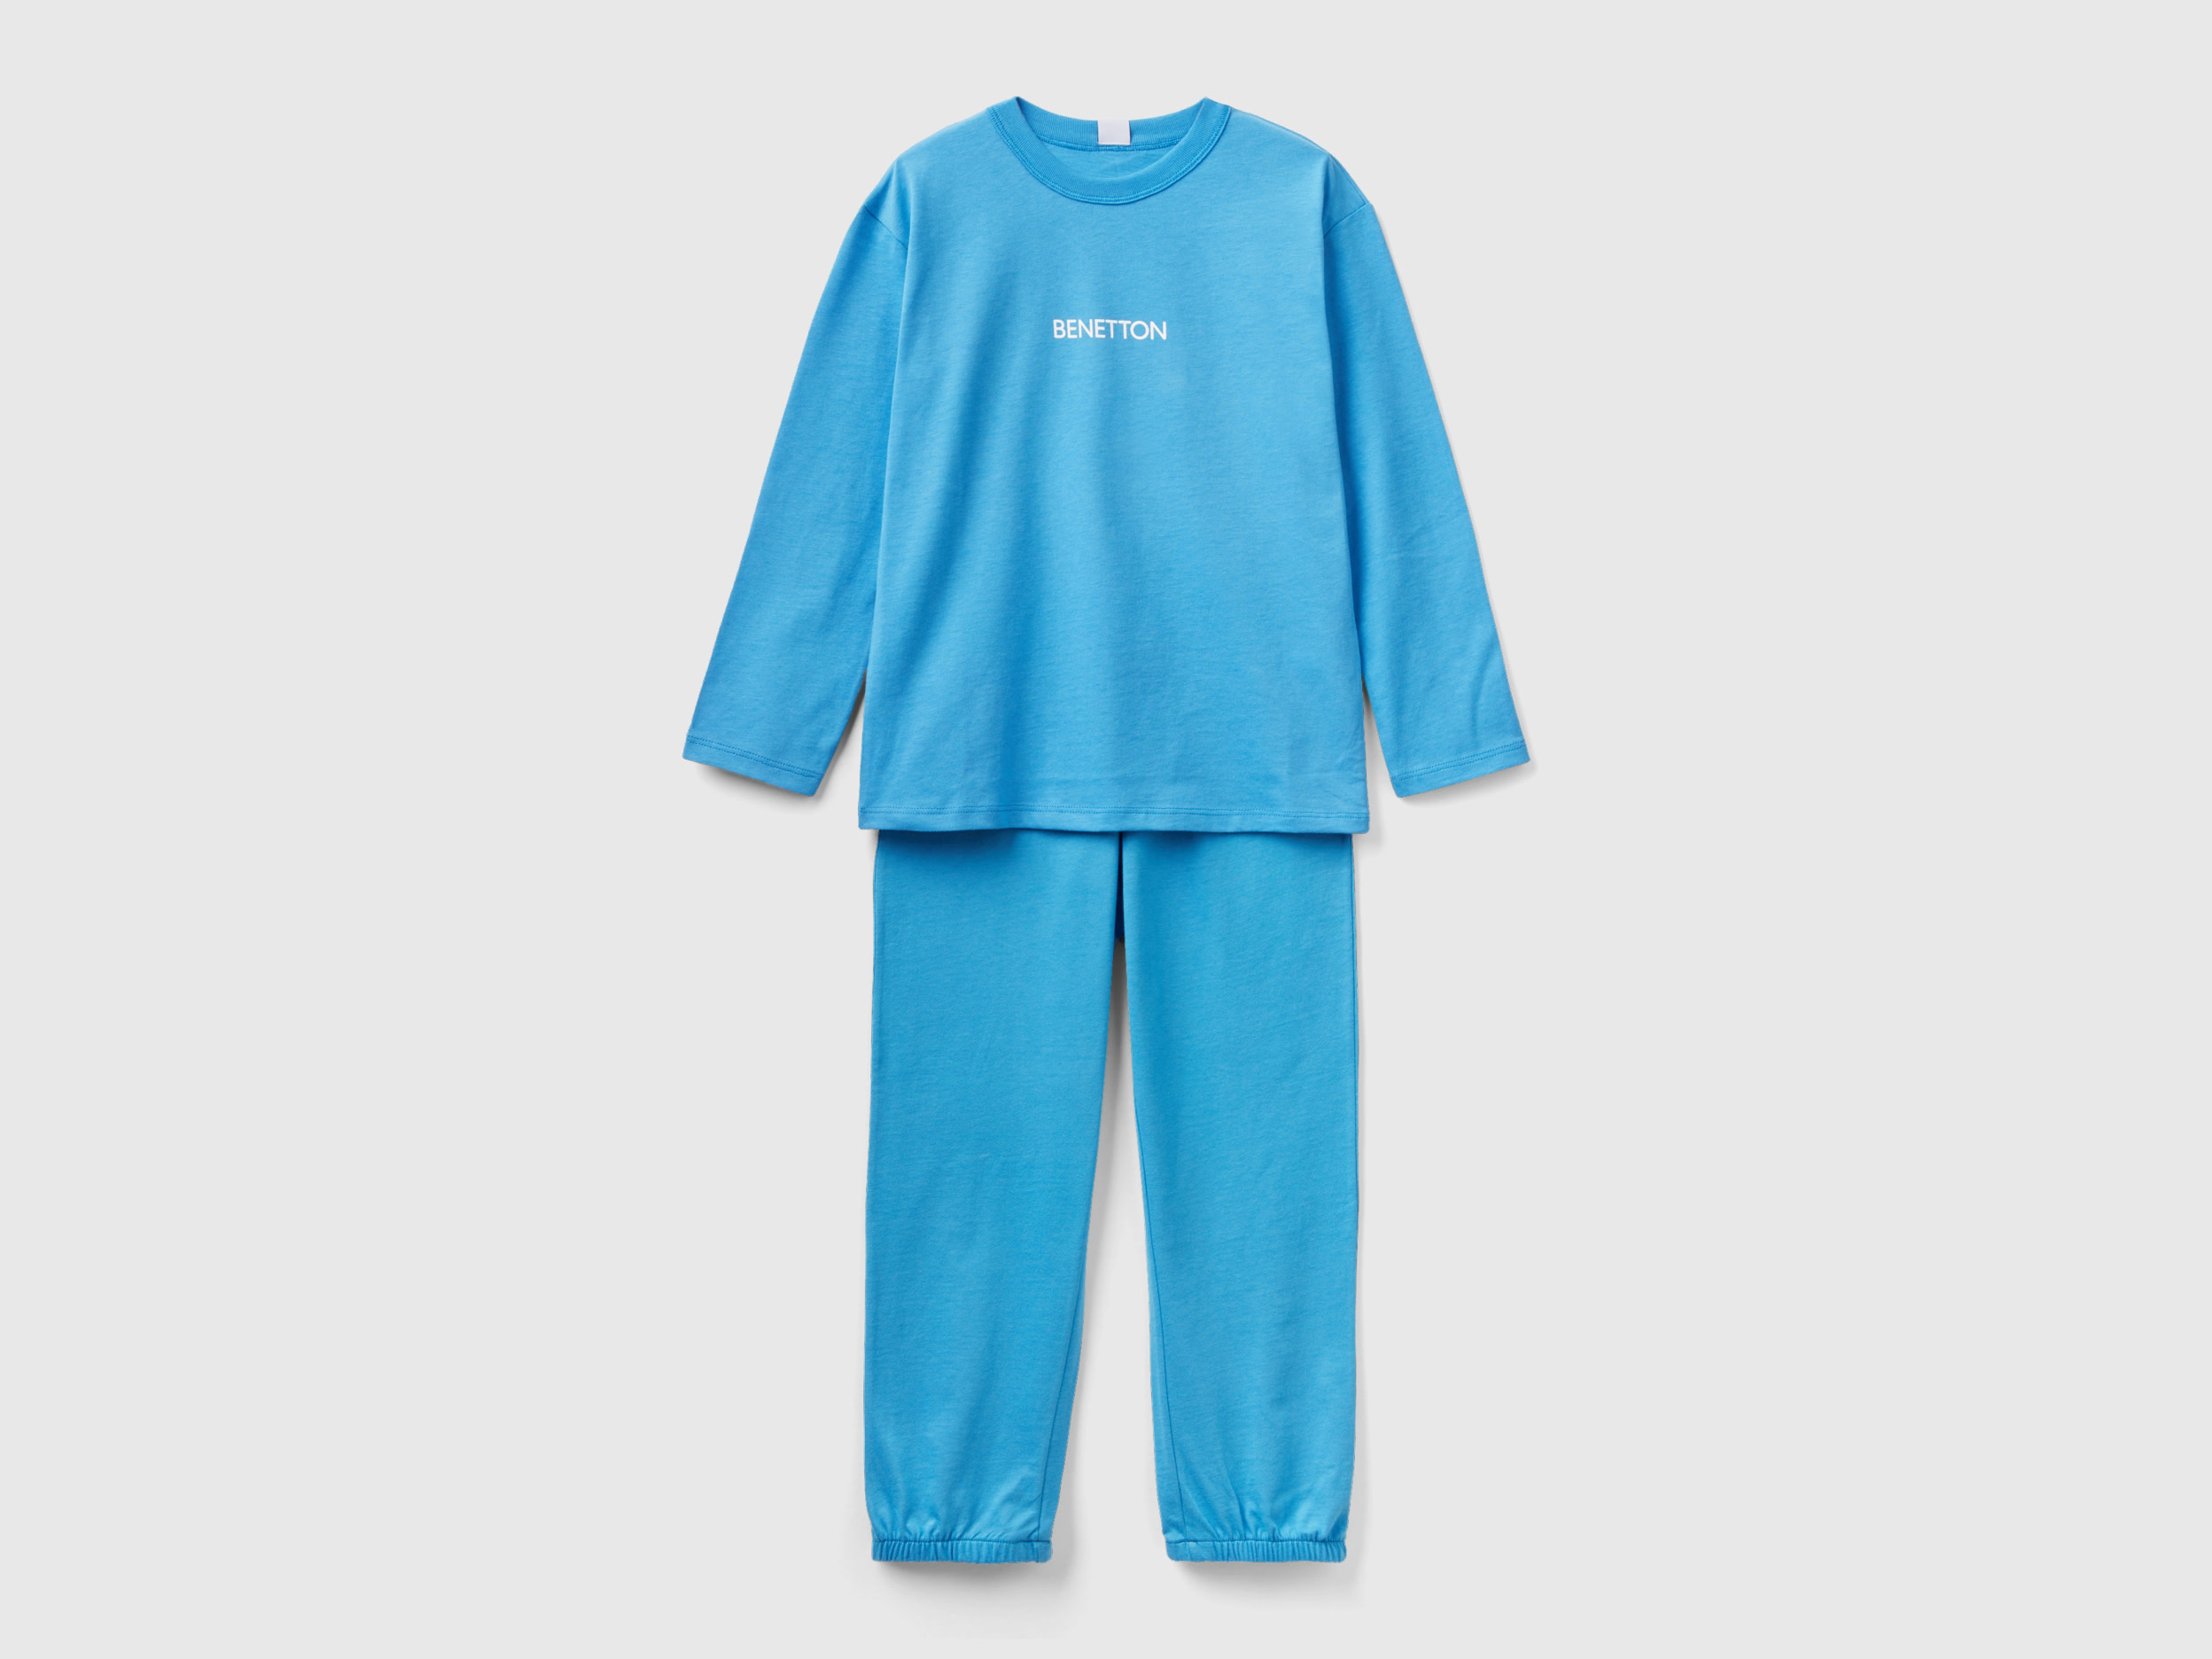 Benetton, Pyjamas In 100% Cotton With Logo, size M, Bright Blue, Kids